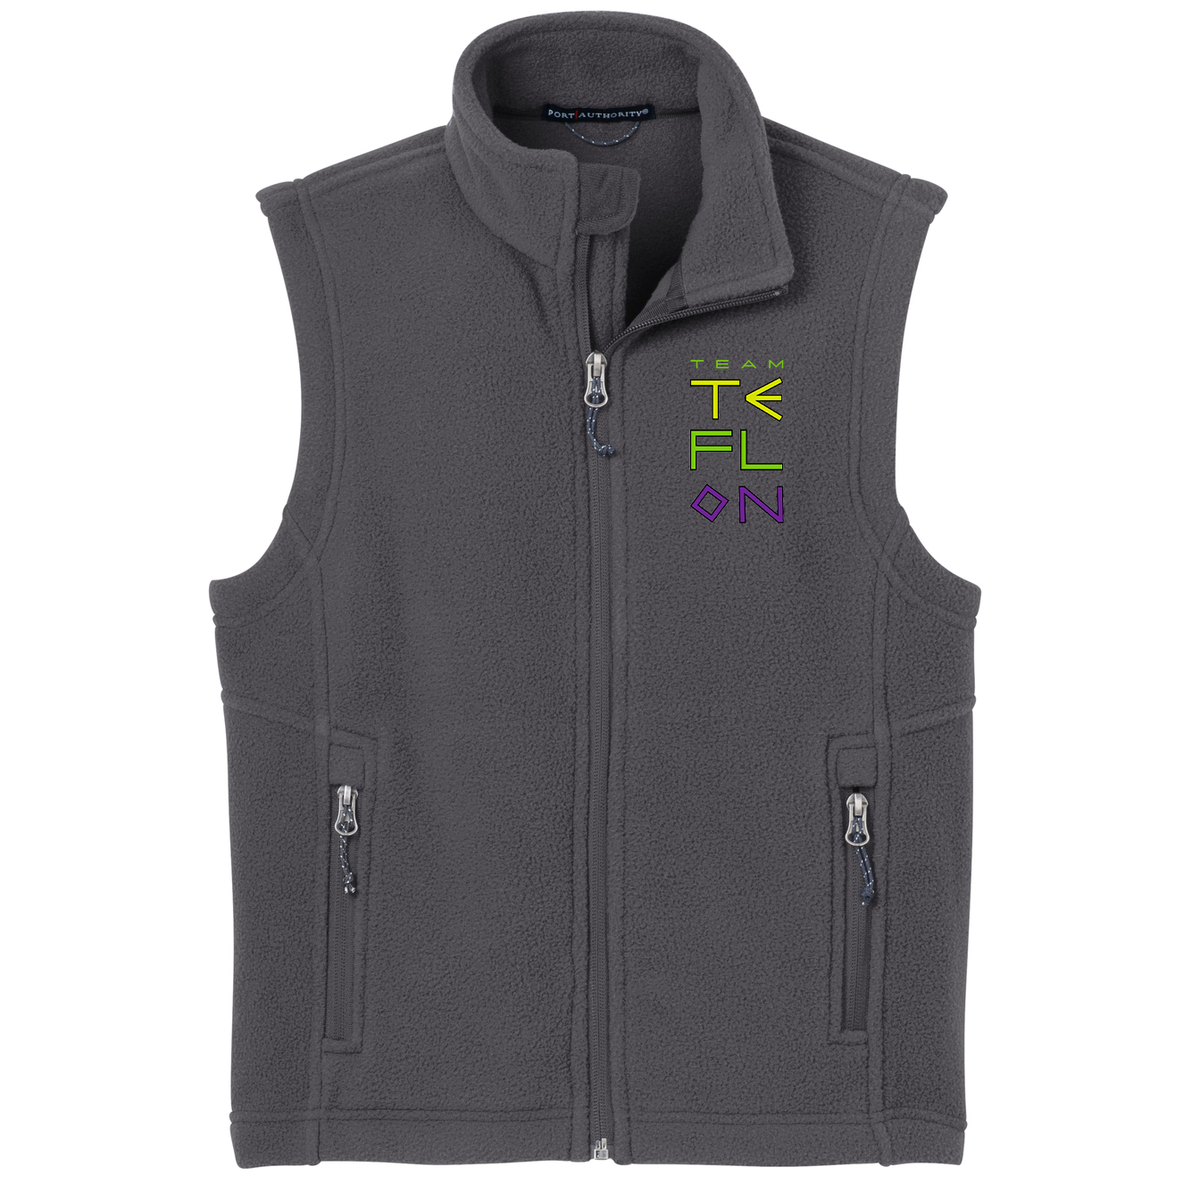 Team Teflon Softball Fleece Vest